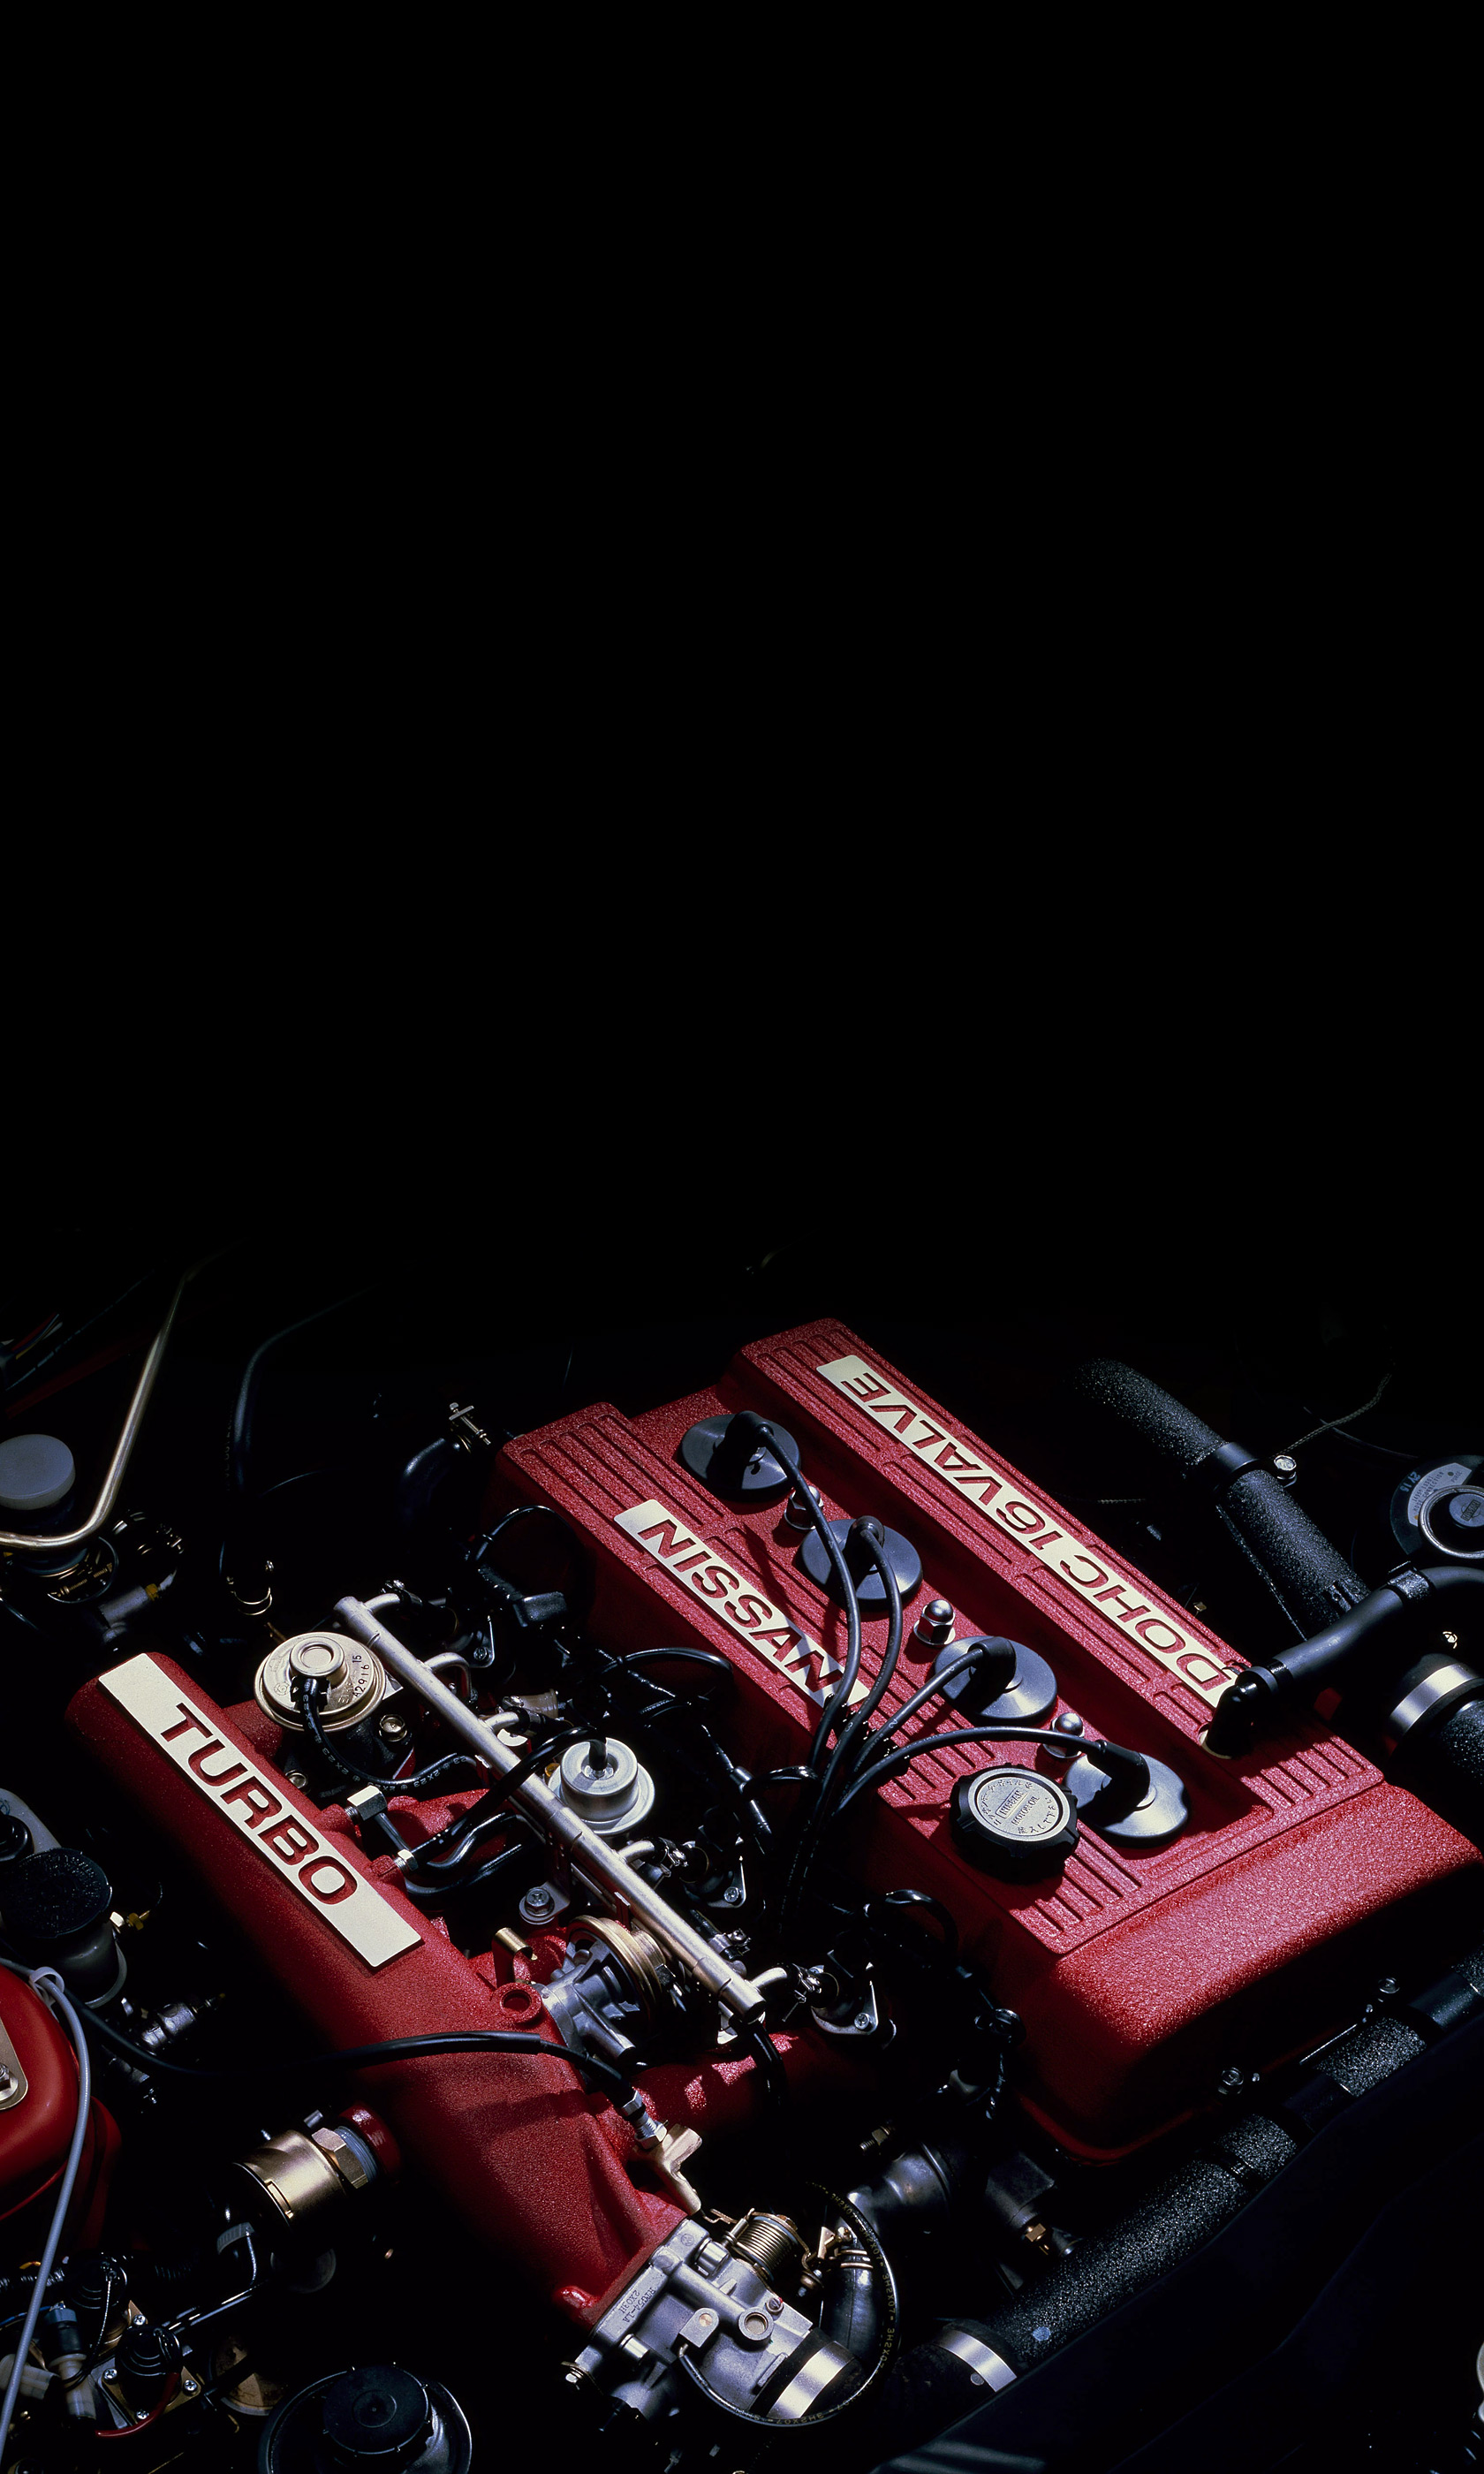  1983 Nissan Skyline 2000RS Turbo Wallpaper.